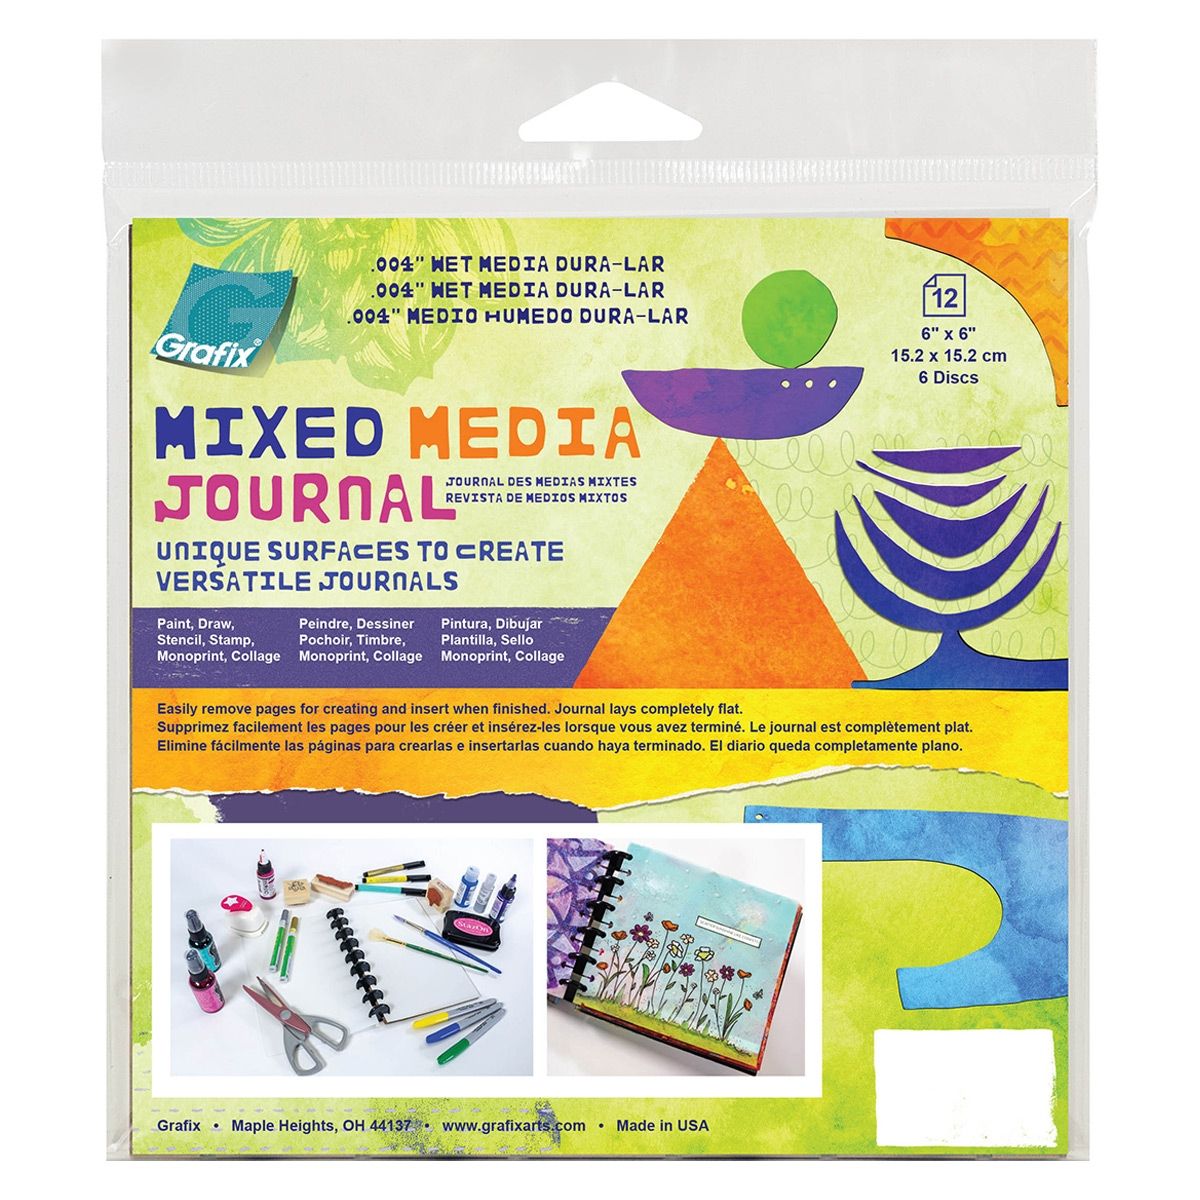 Grafix Mixed Media .004 Wet Media Dura-Lar 6x6 Disc-Bound Journal